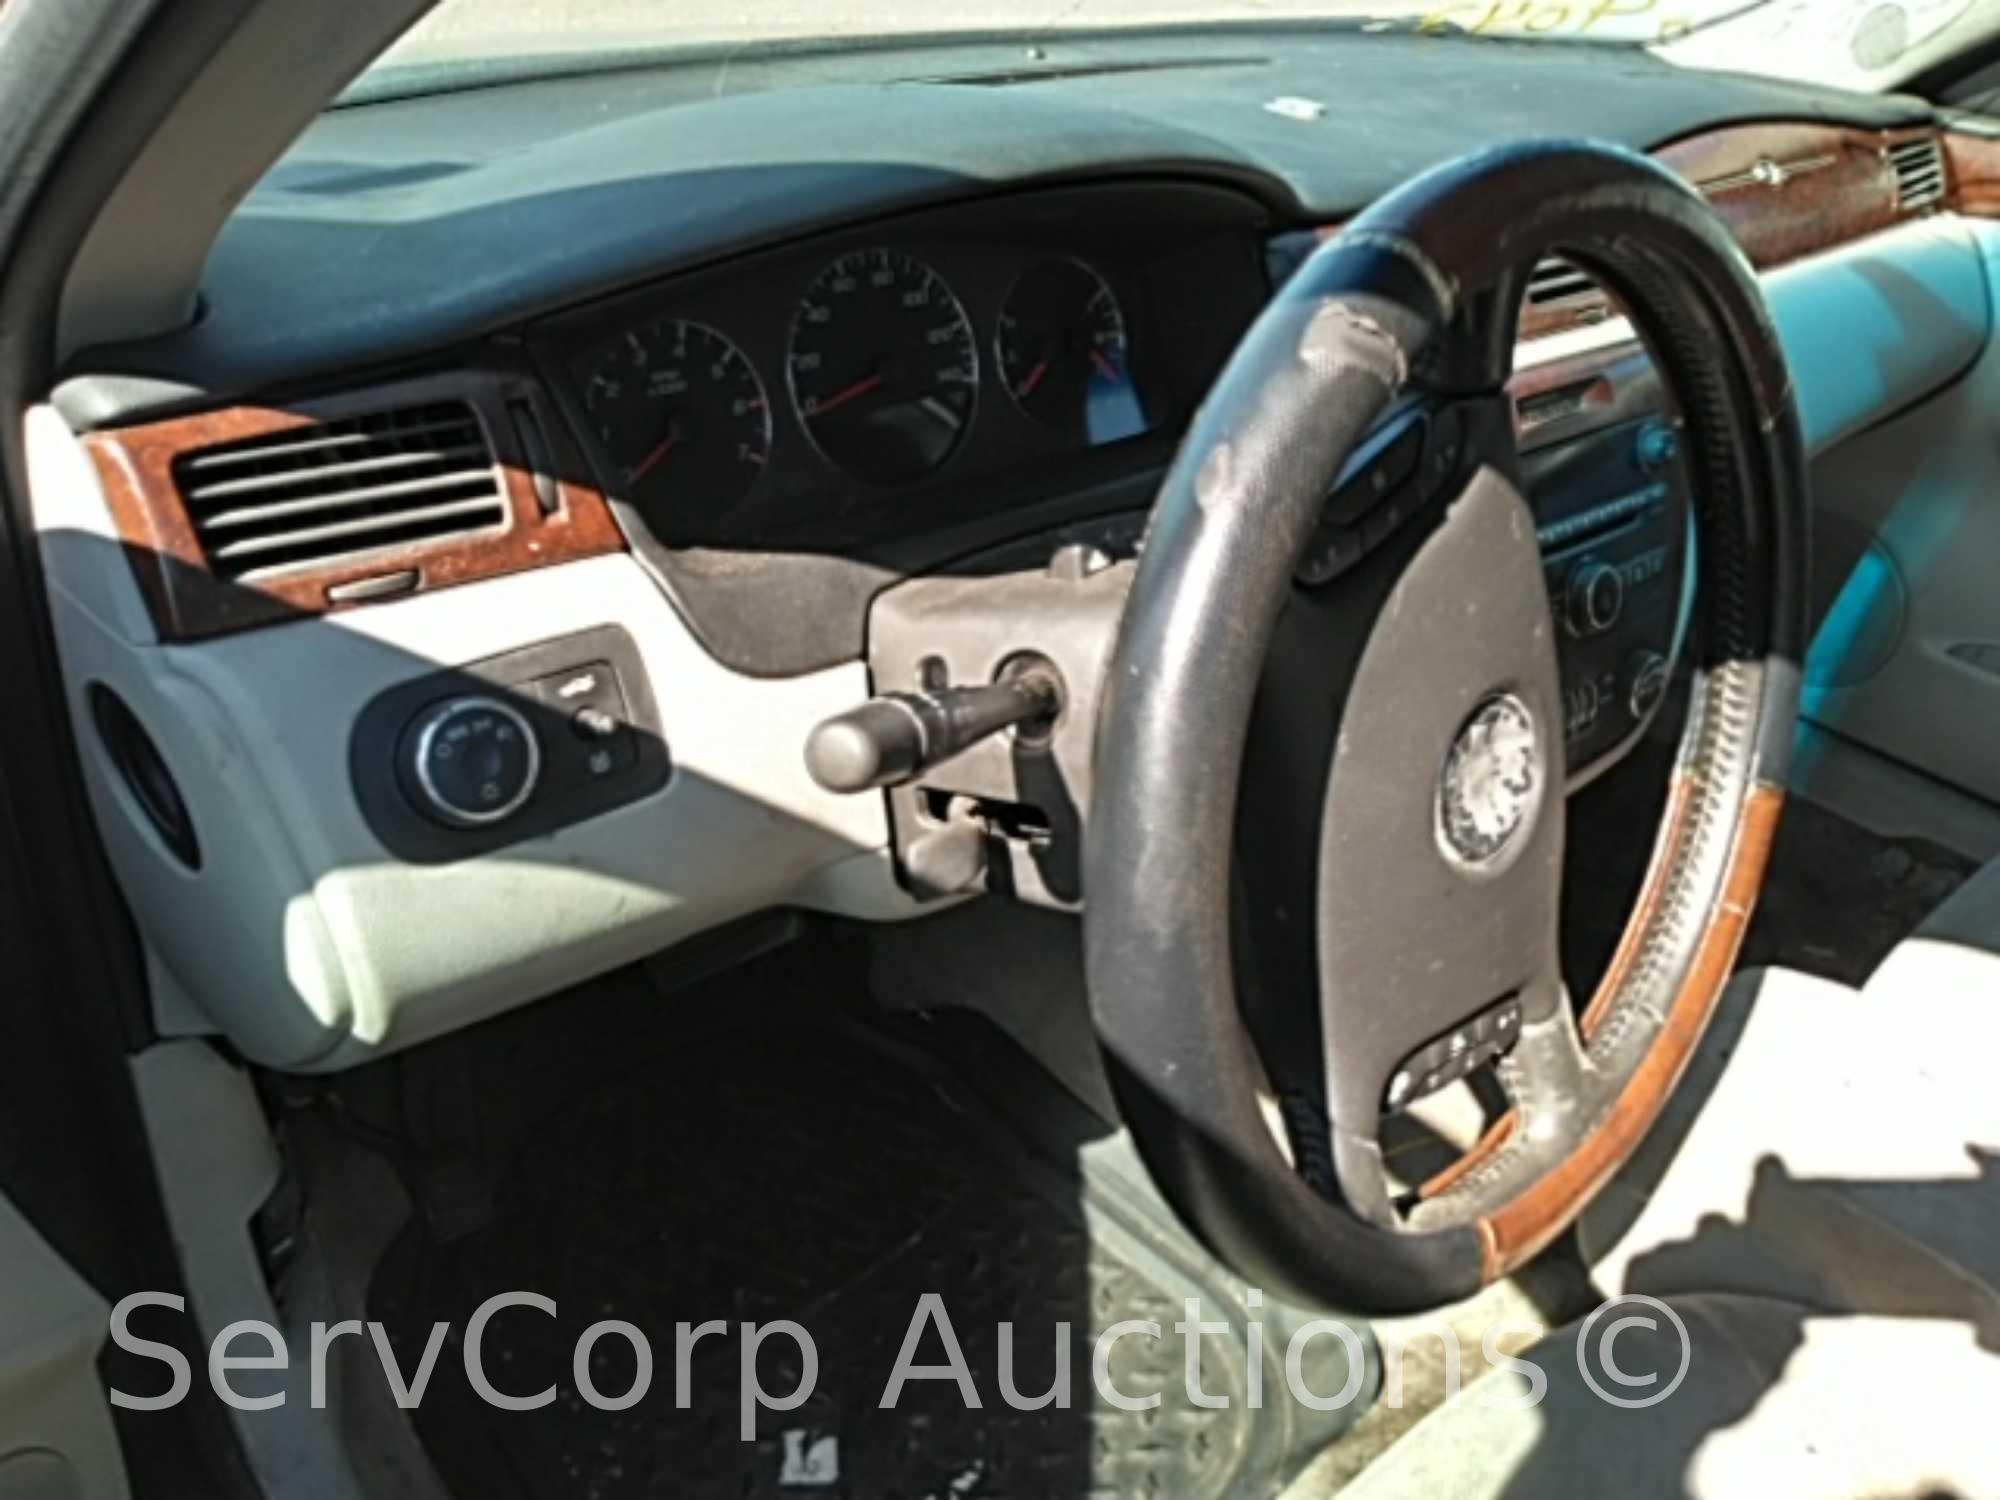 2007 Chevrolet Impala Passenger Car, VIN # 2G1WT58K779217753 Reconstructed